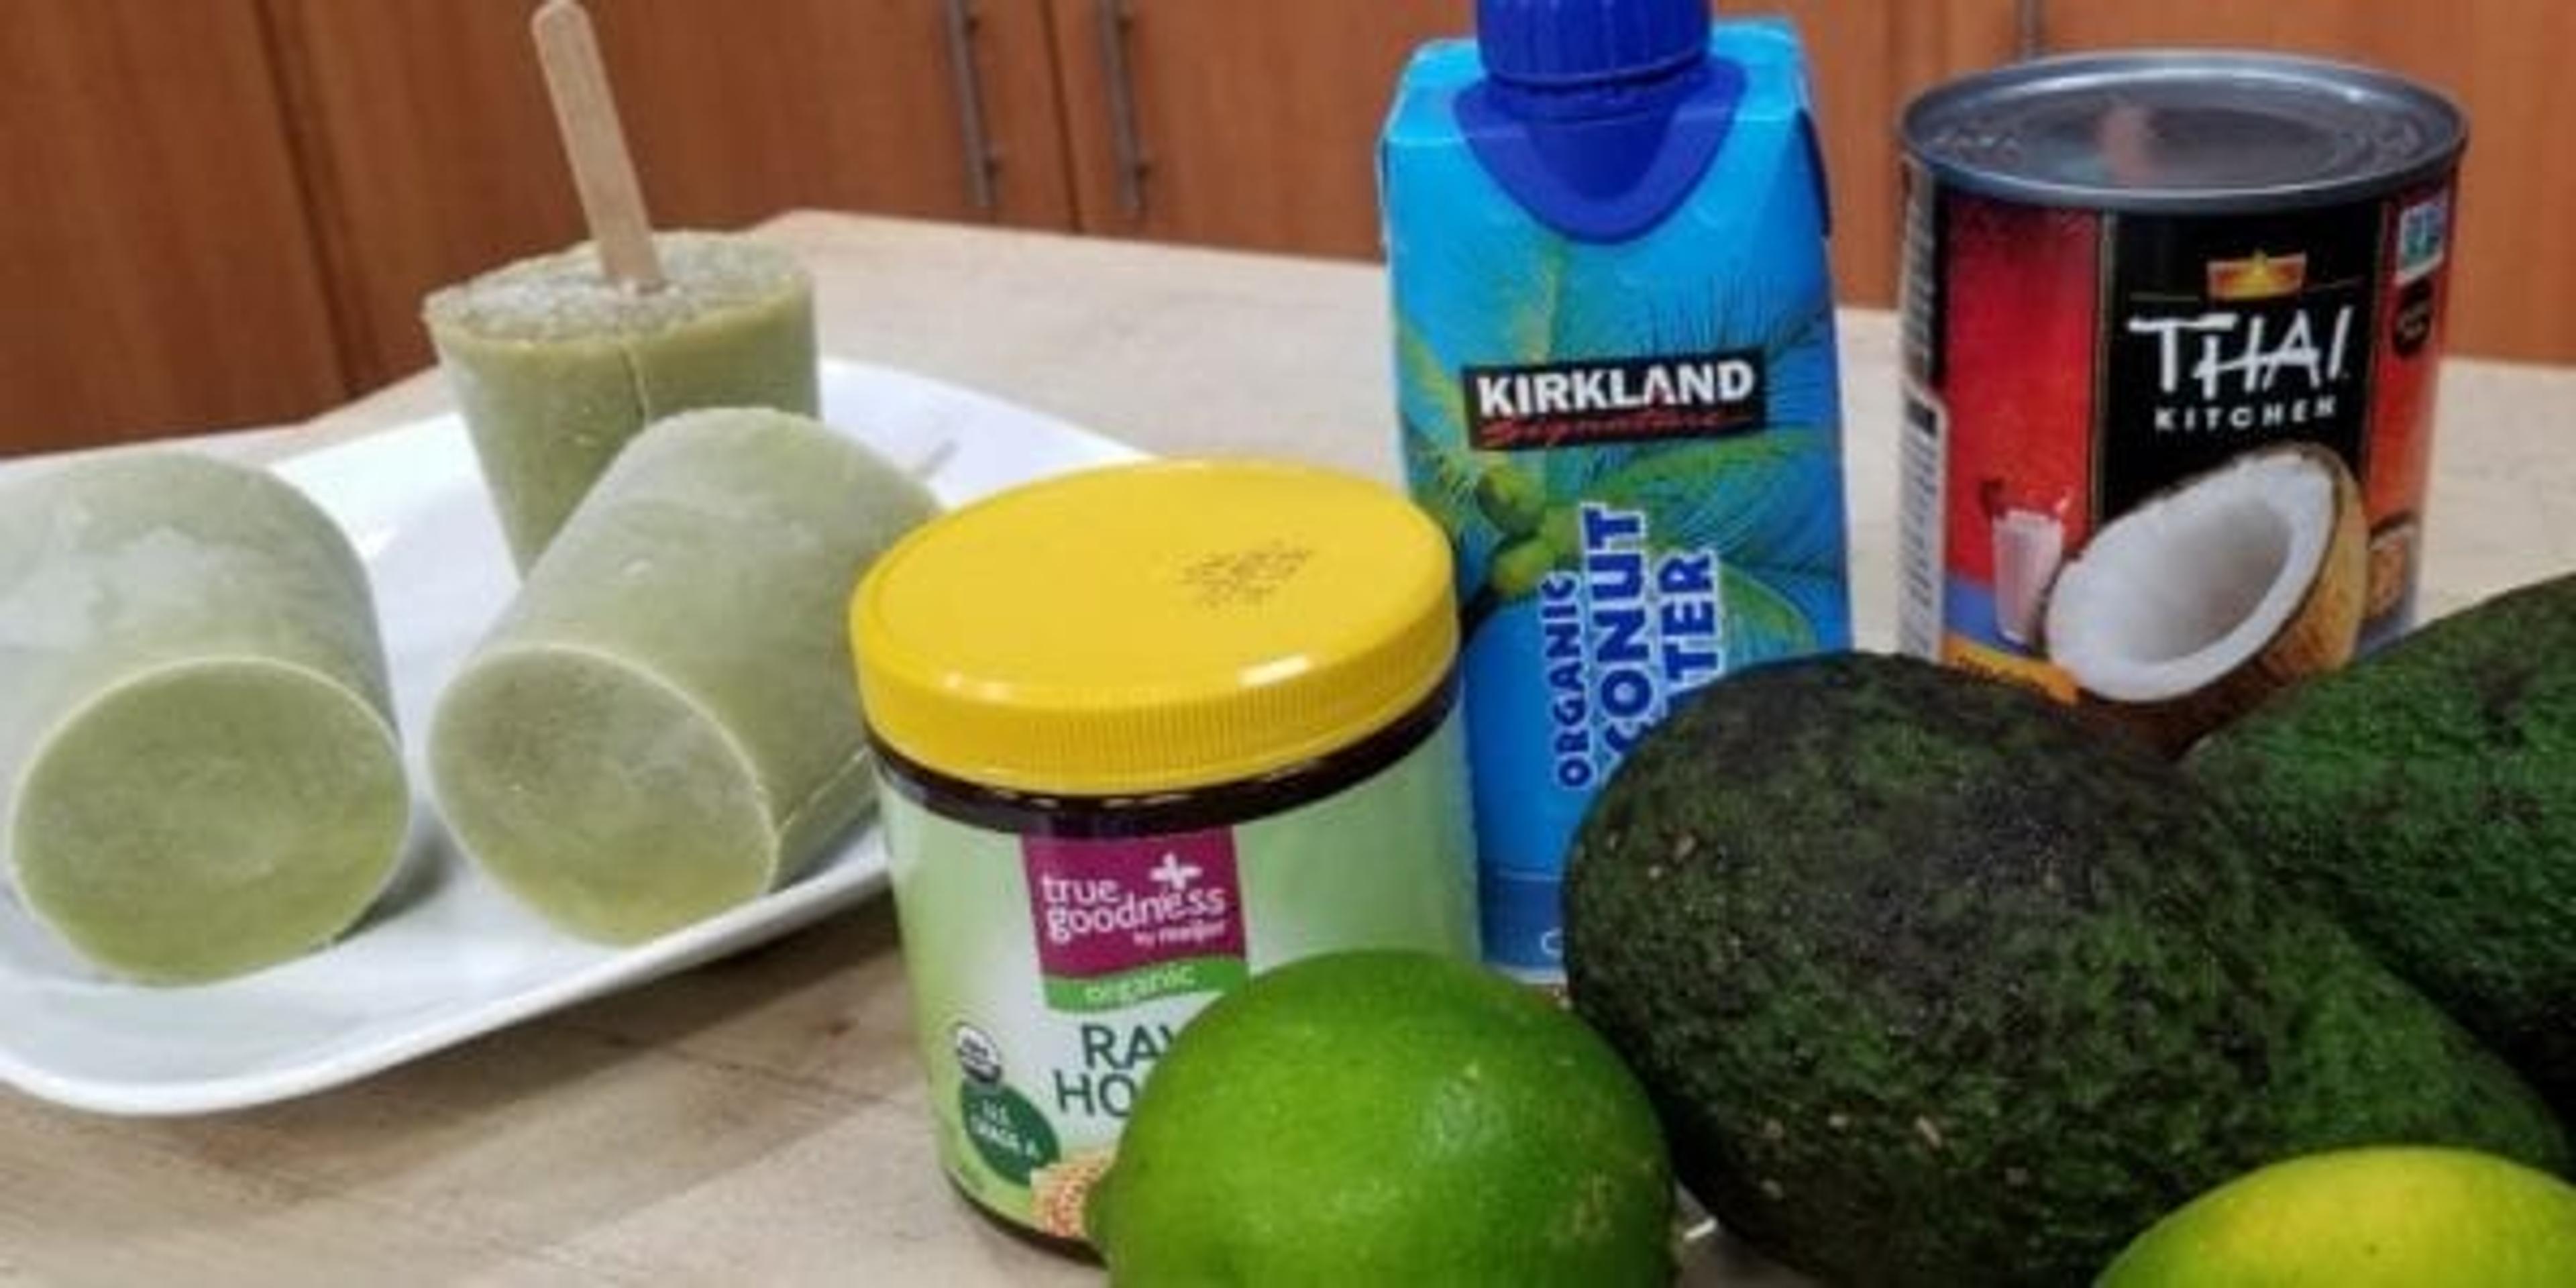 Avocado Paletas and ingredients